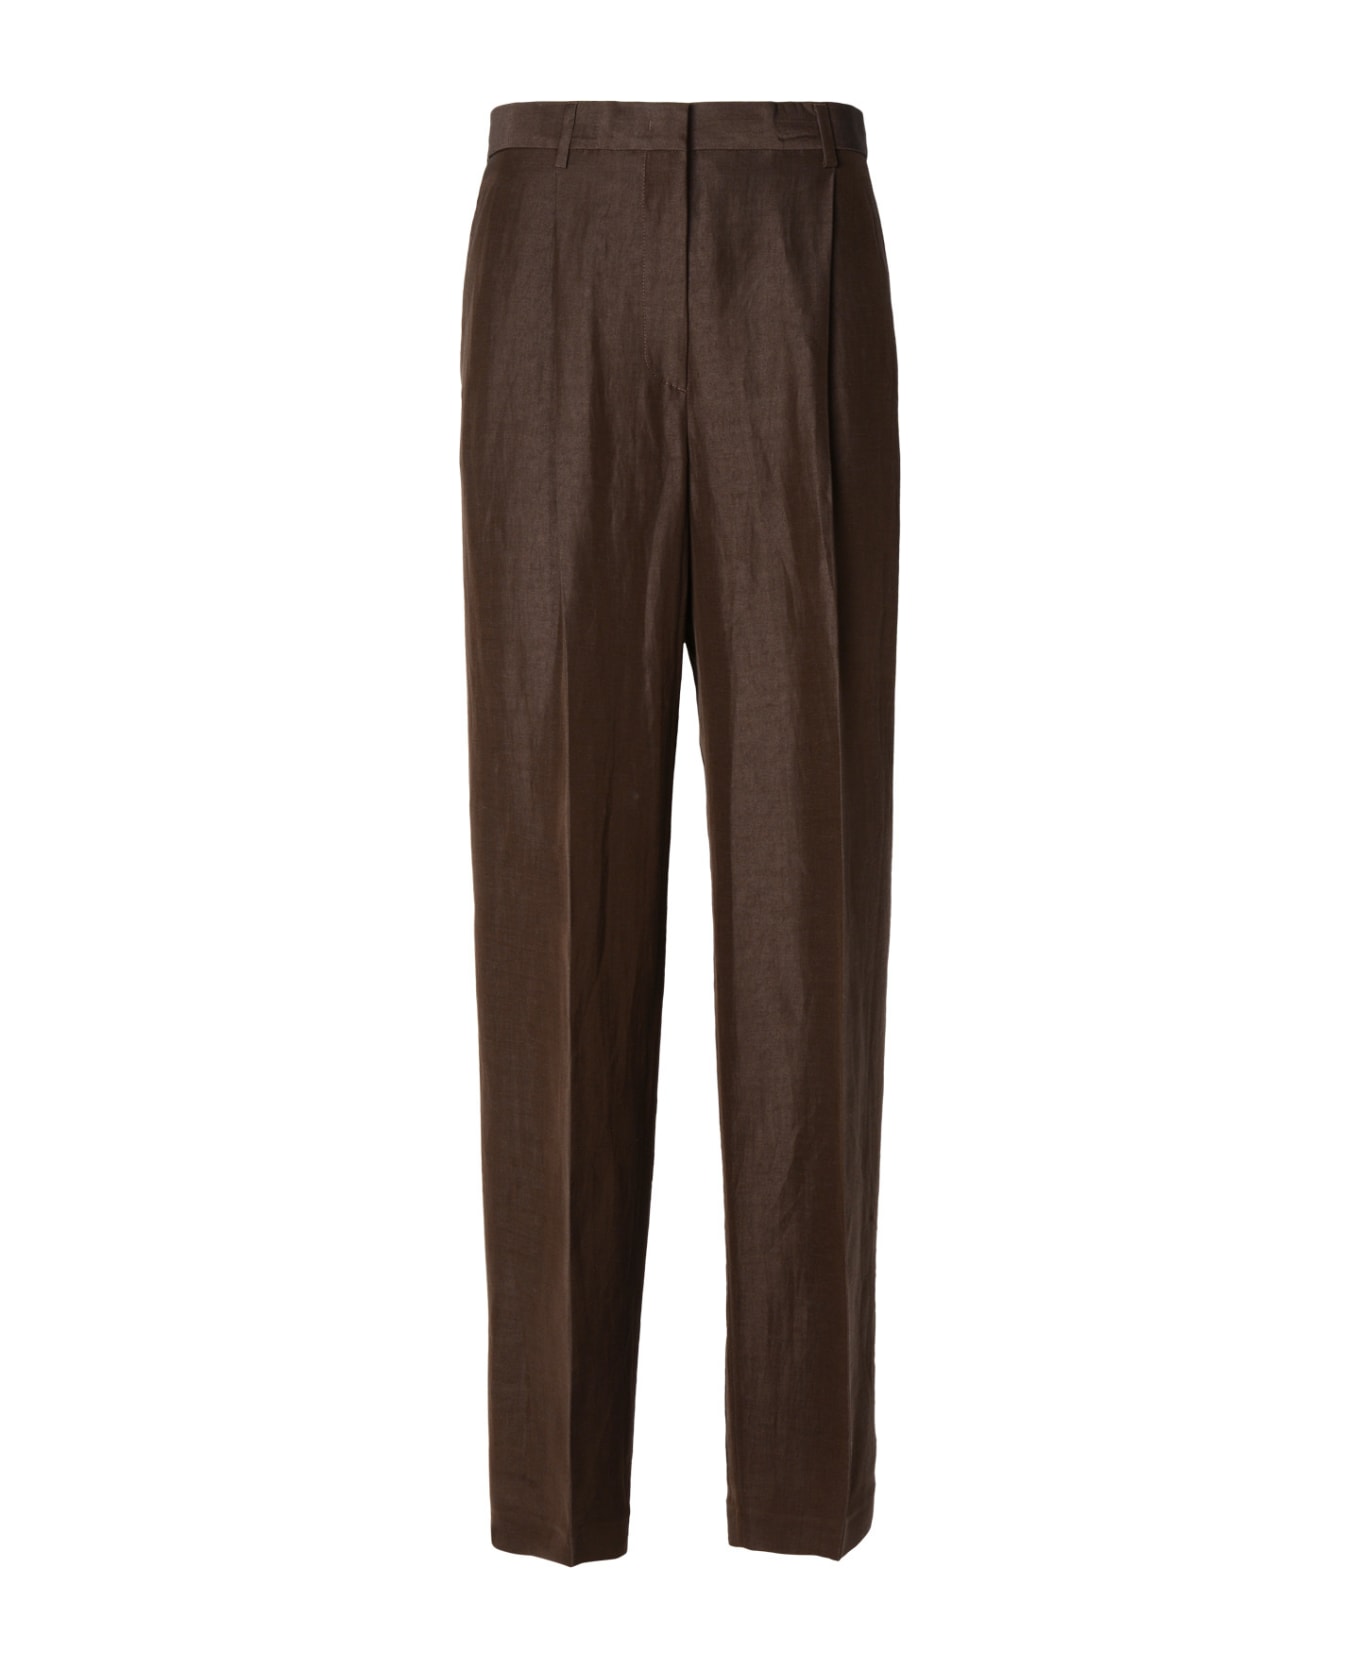 MSGM Brown Linen Blend Trousers - Dark brown